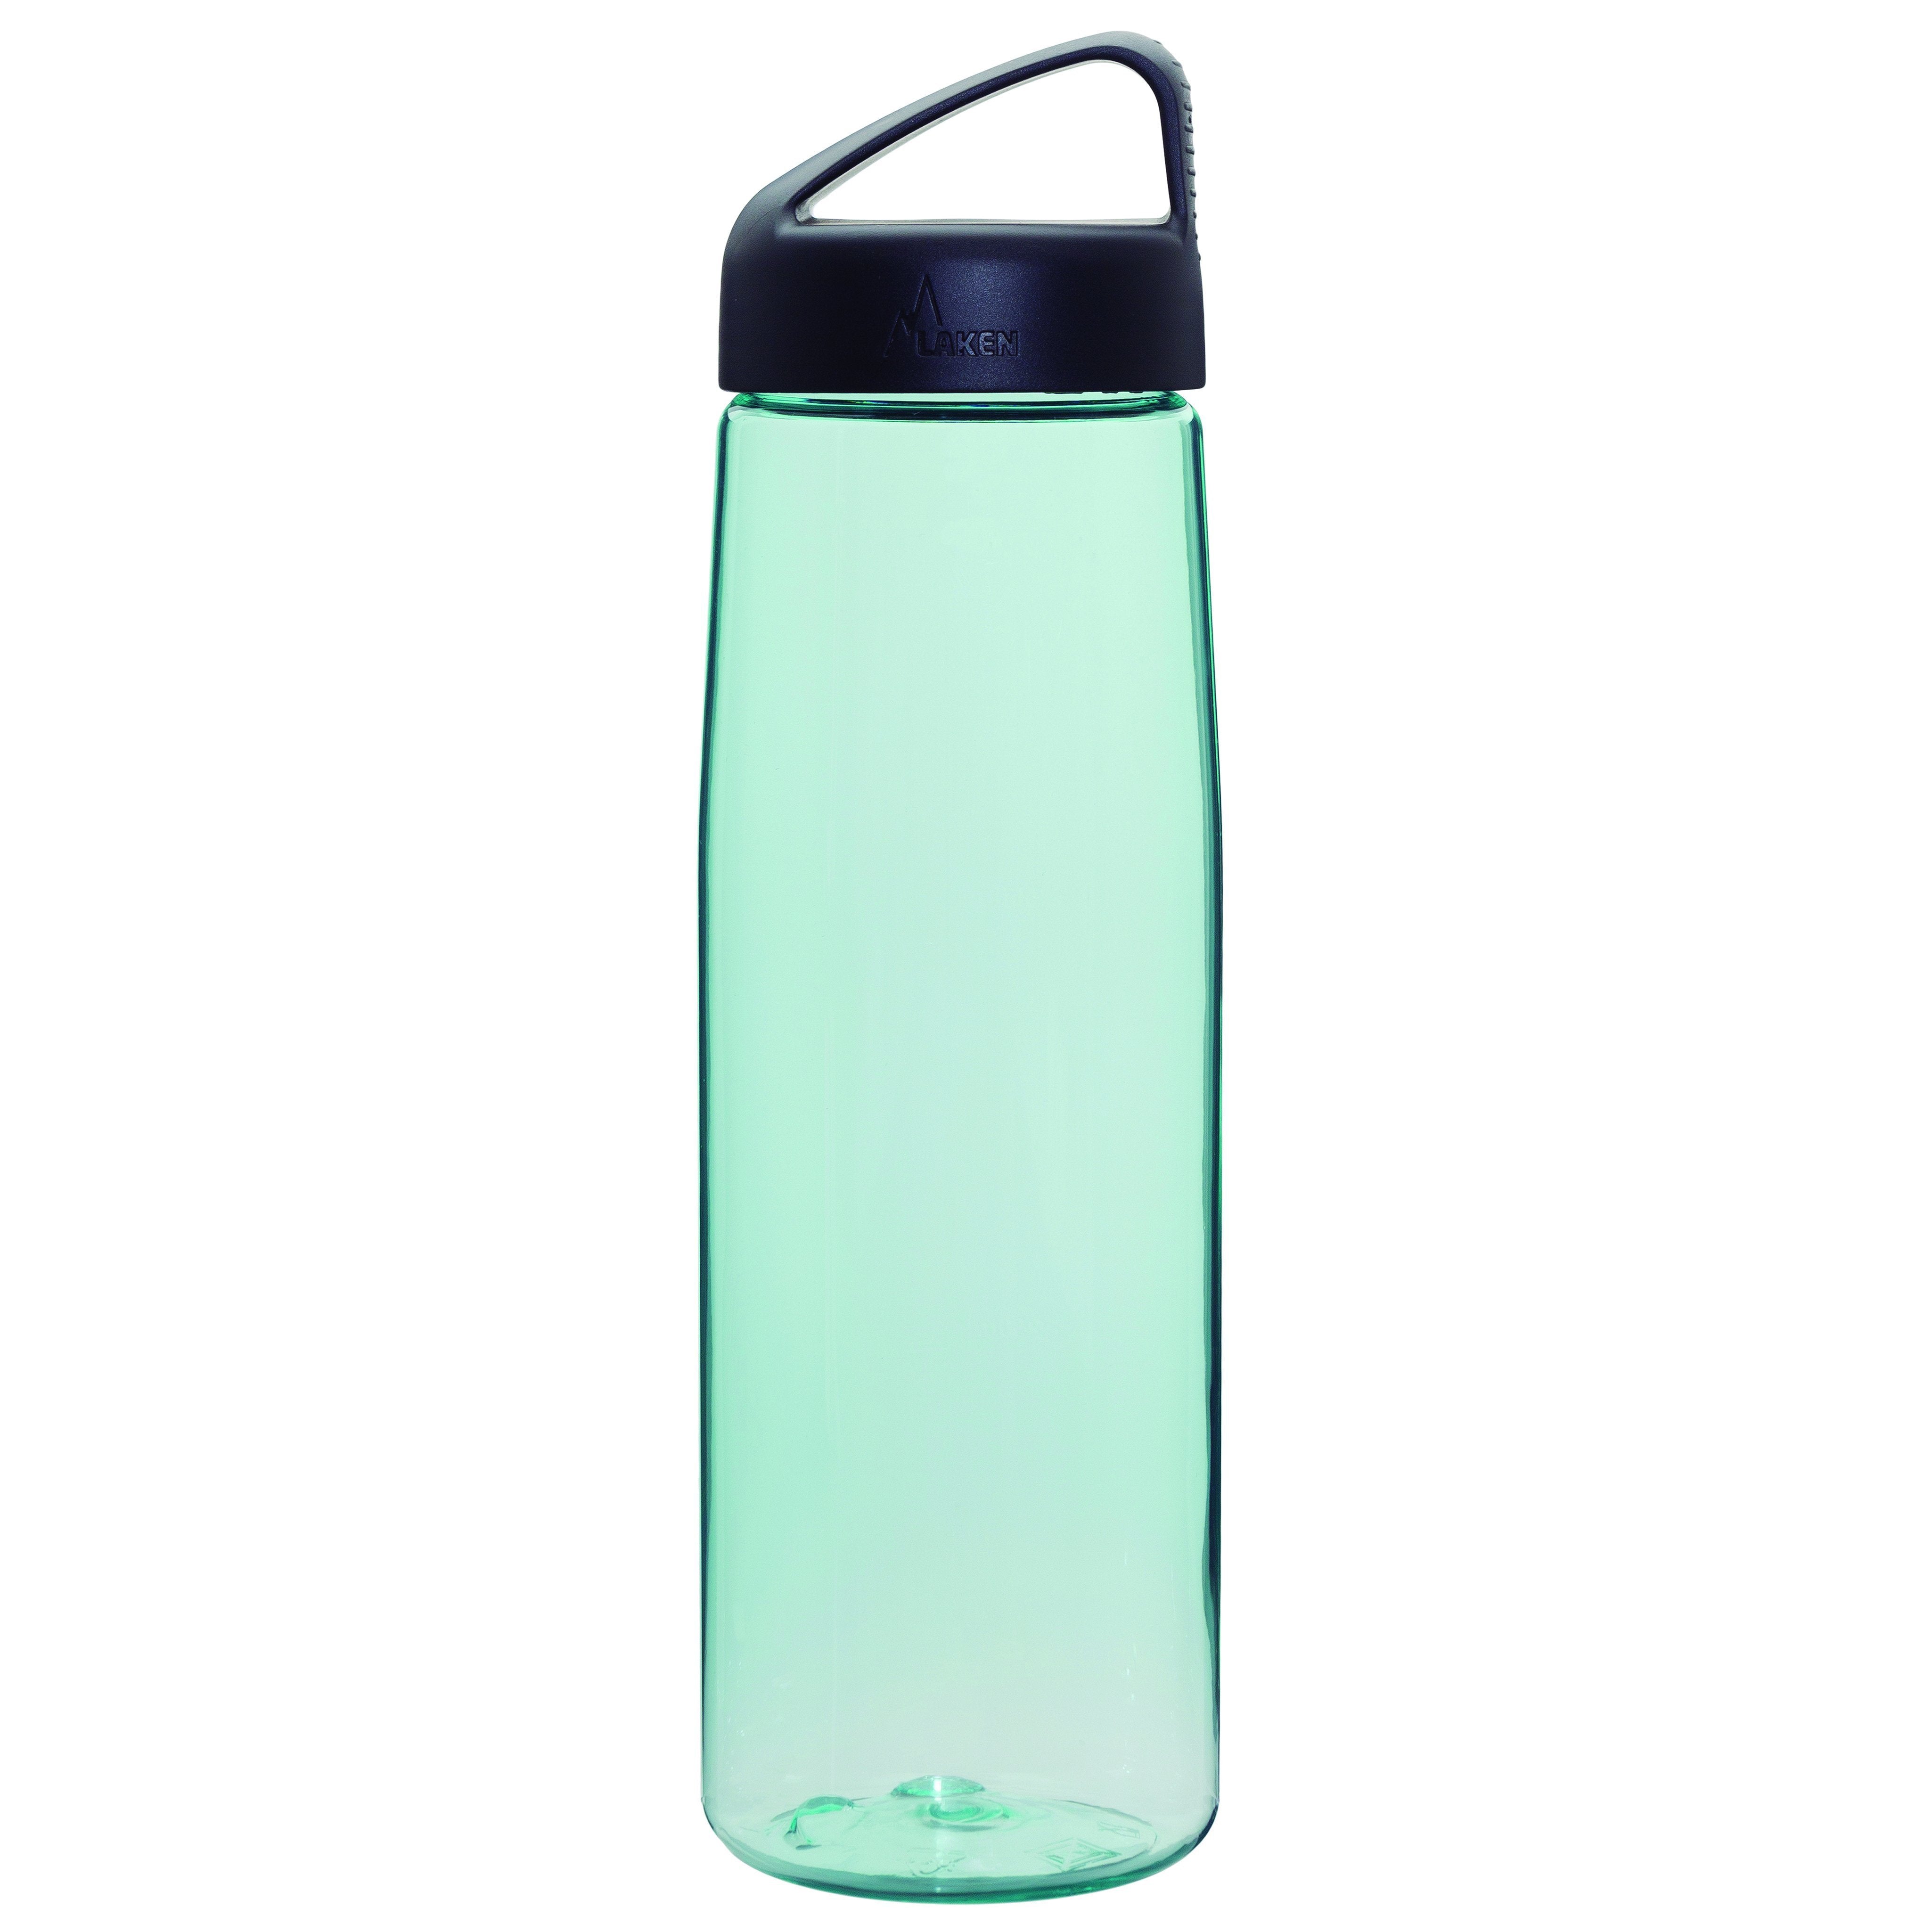 Laken 750 ml / Light Blue Classic Tritan Bottle